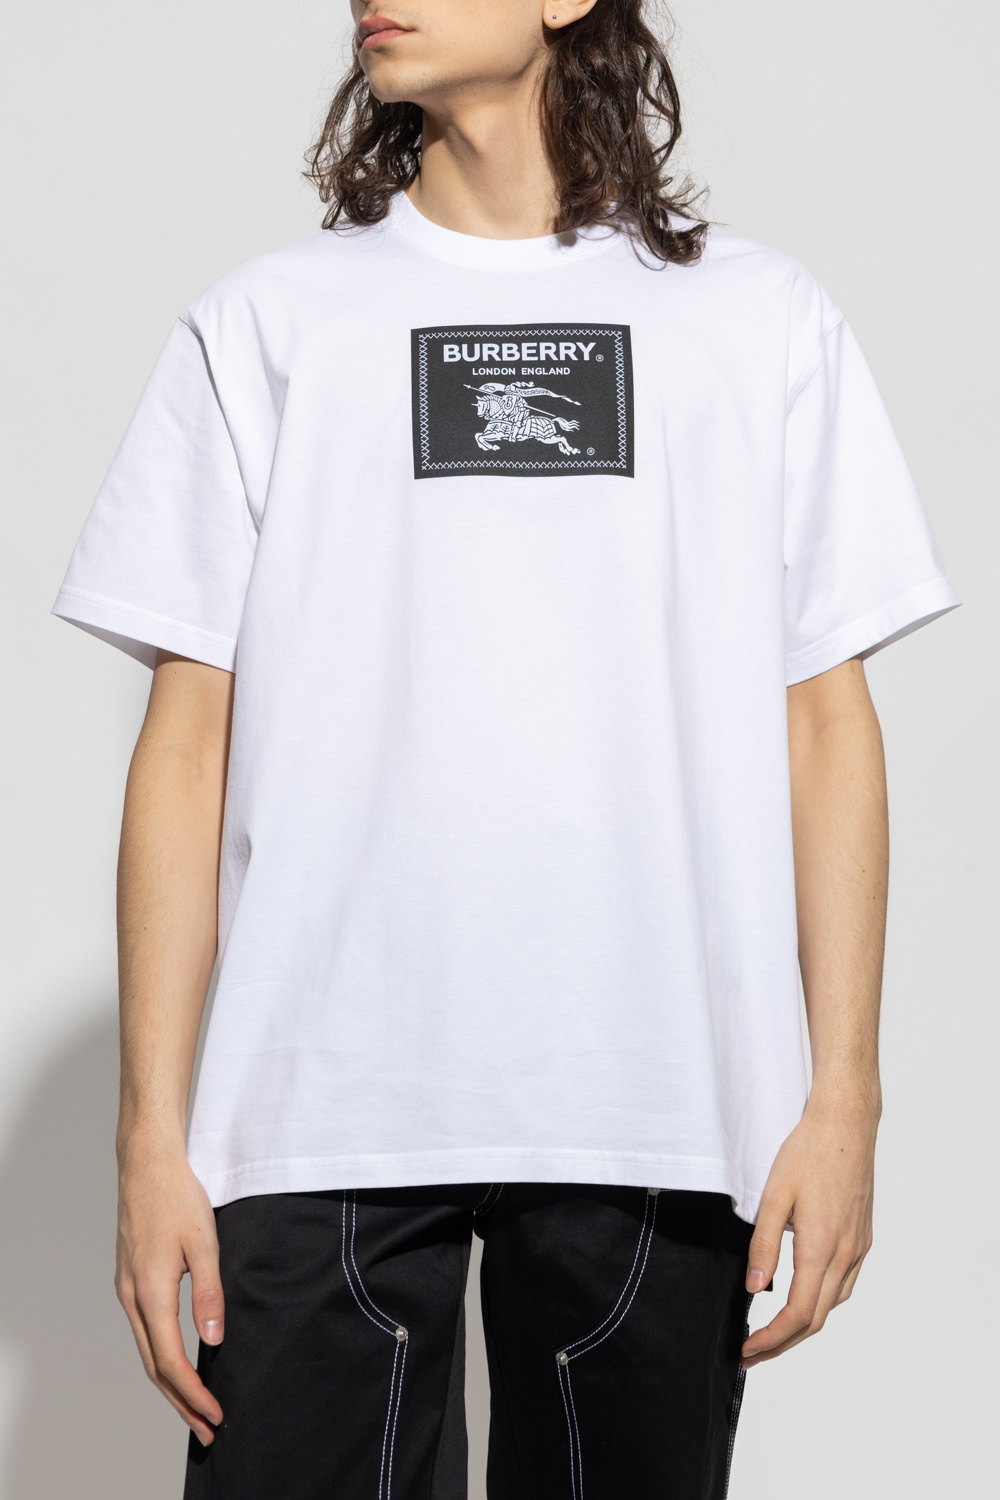 Burberry ‘Roundwood’ T-shirt